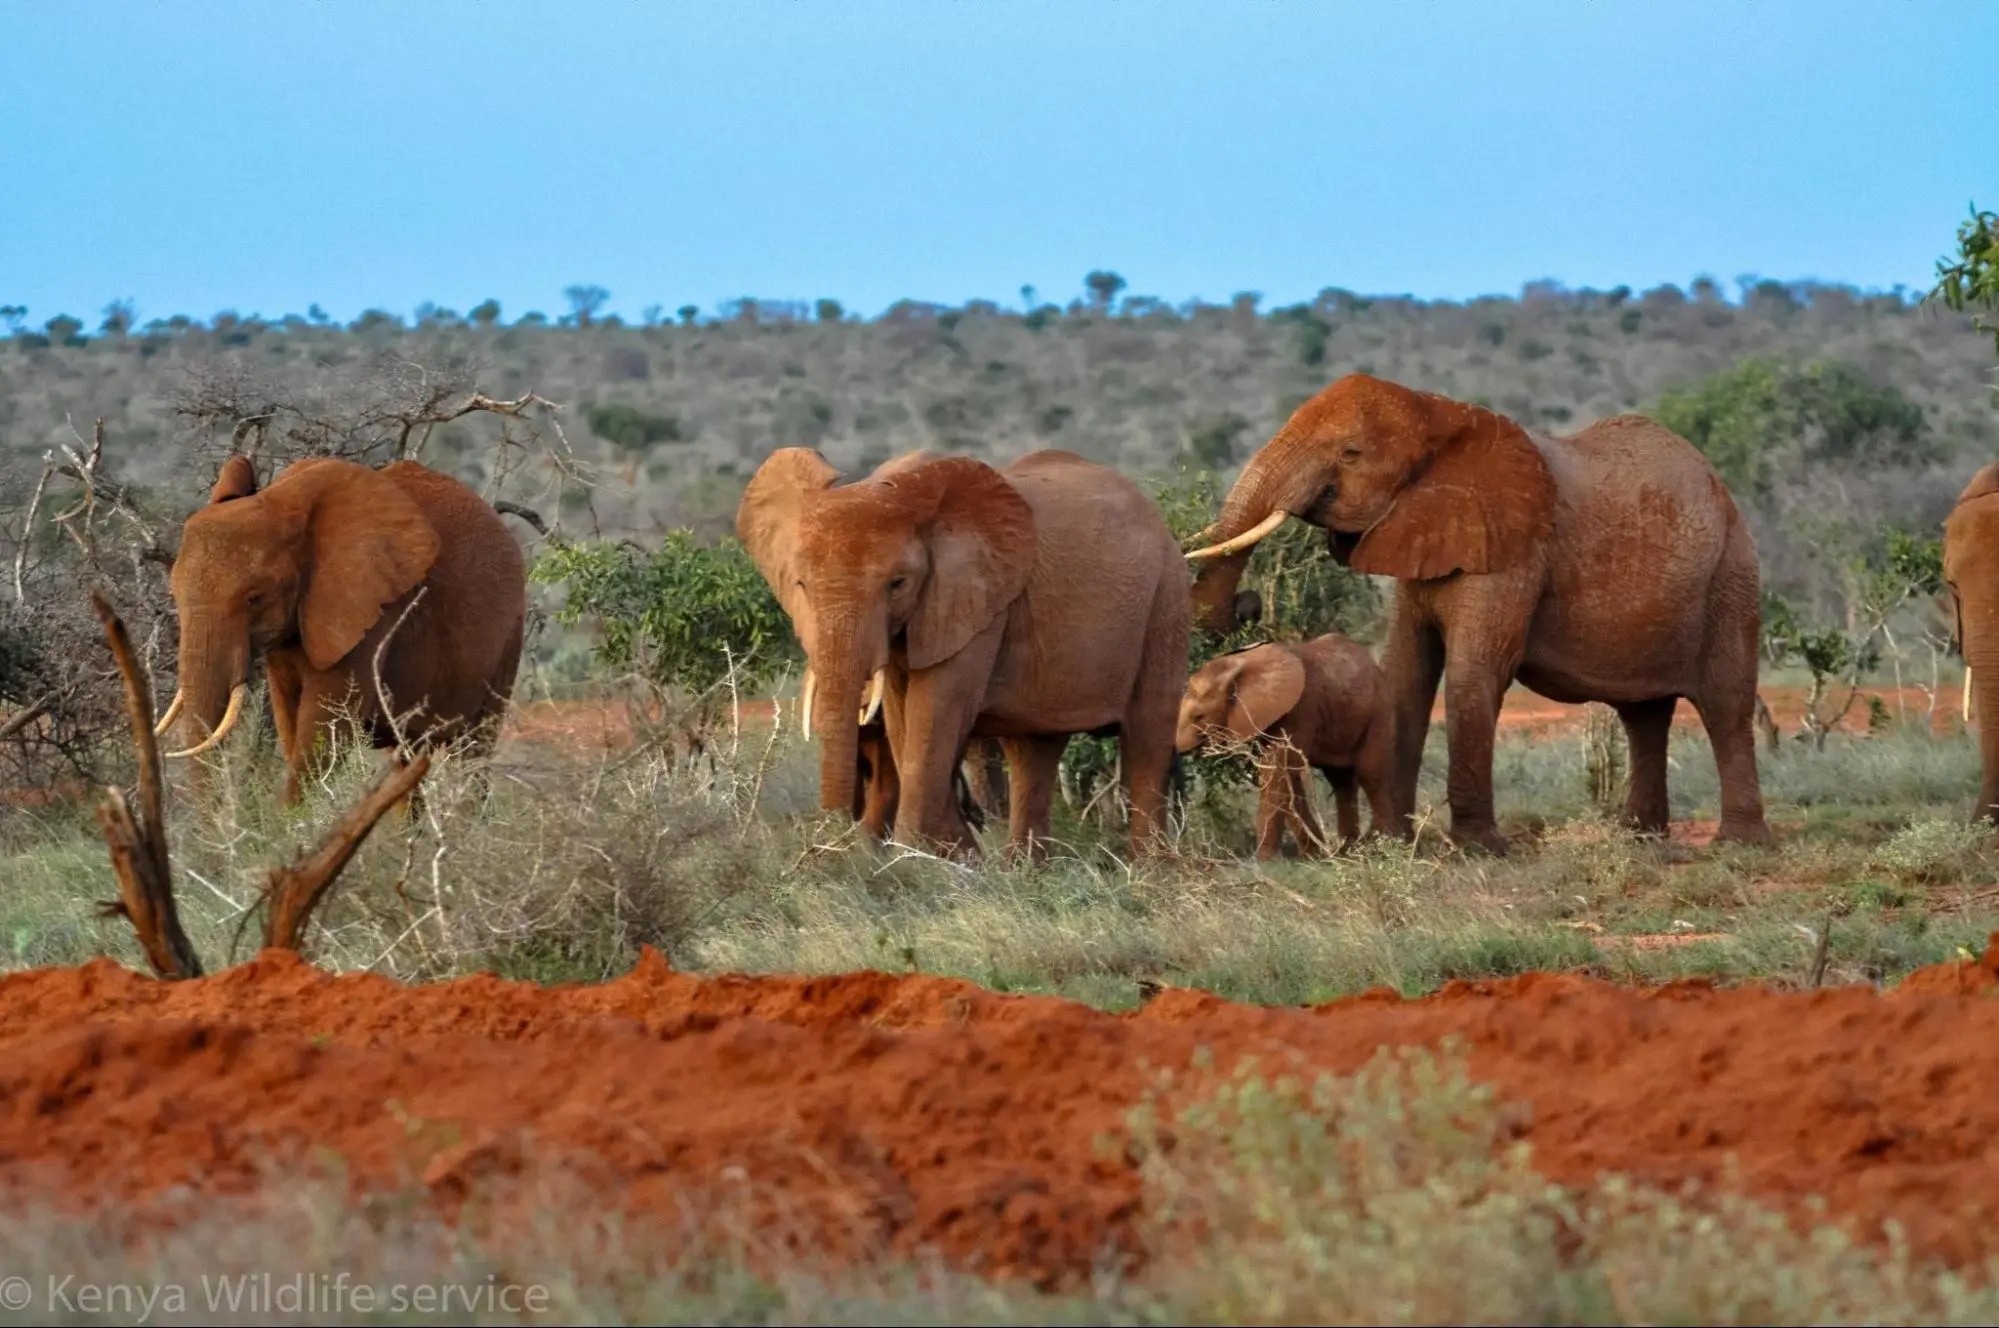 The red elephants of Tsavo National Park